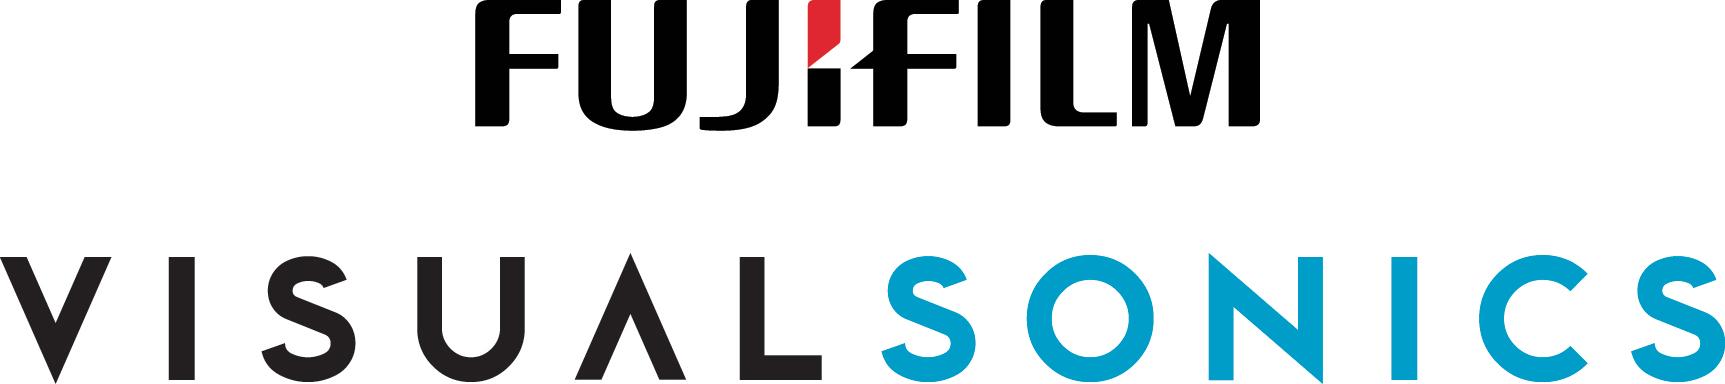 FUJIFILM VisualSonics -Logo-Stacked - FullColour - No Tagline - CMYK